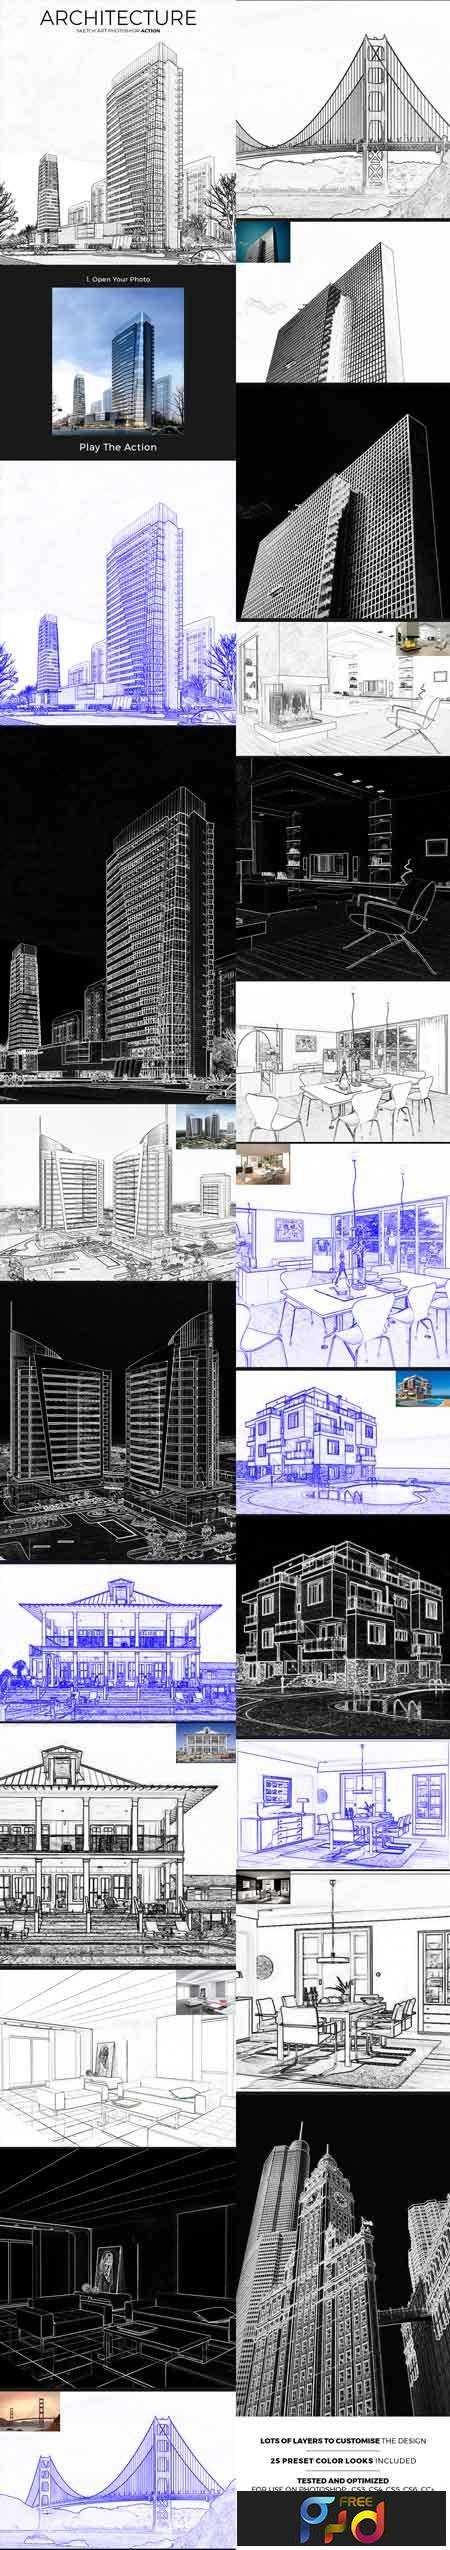 1803135 Architecture Sketch Art Photoshop Action 21403946 1